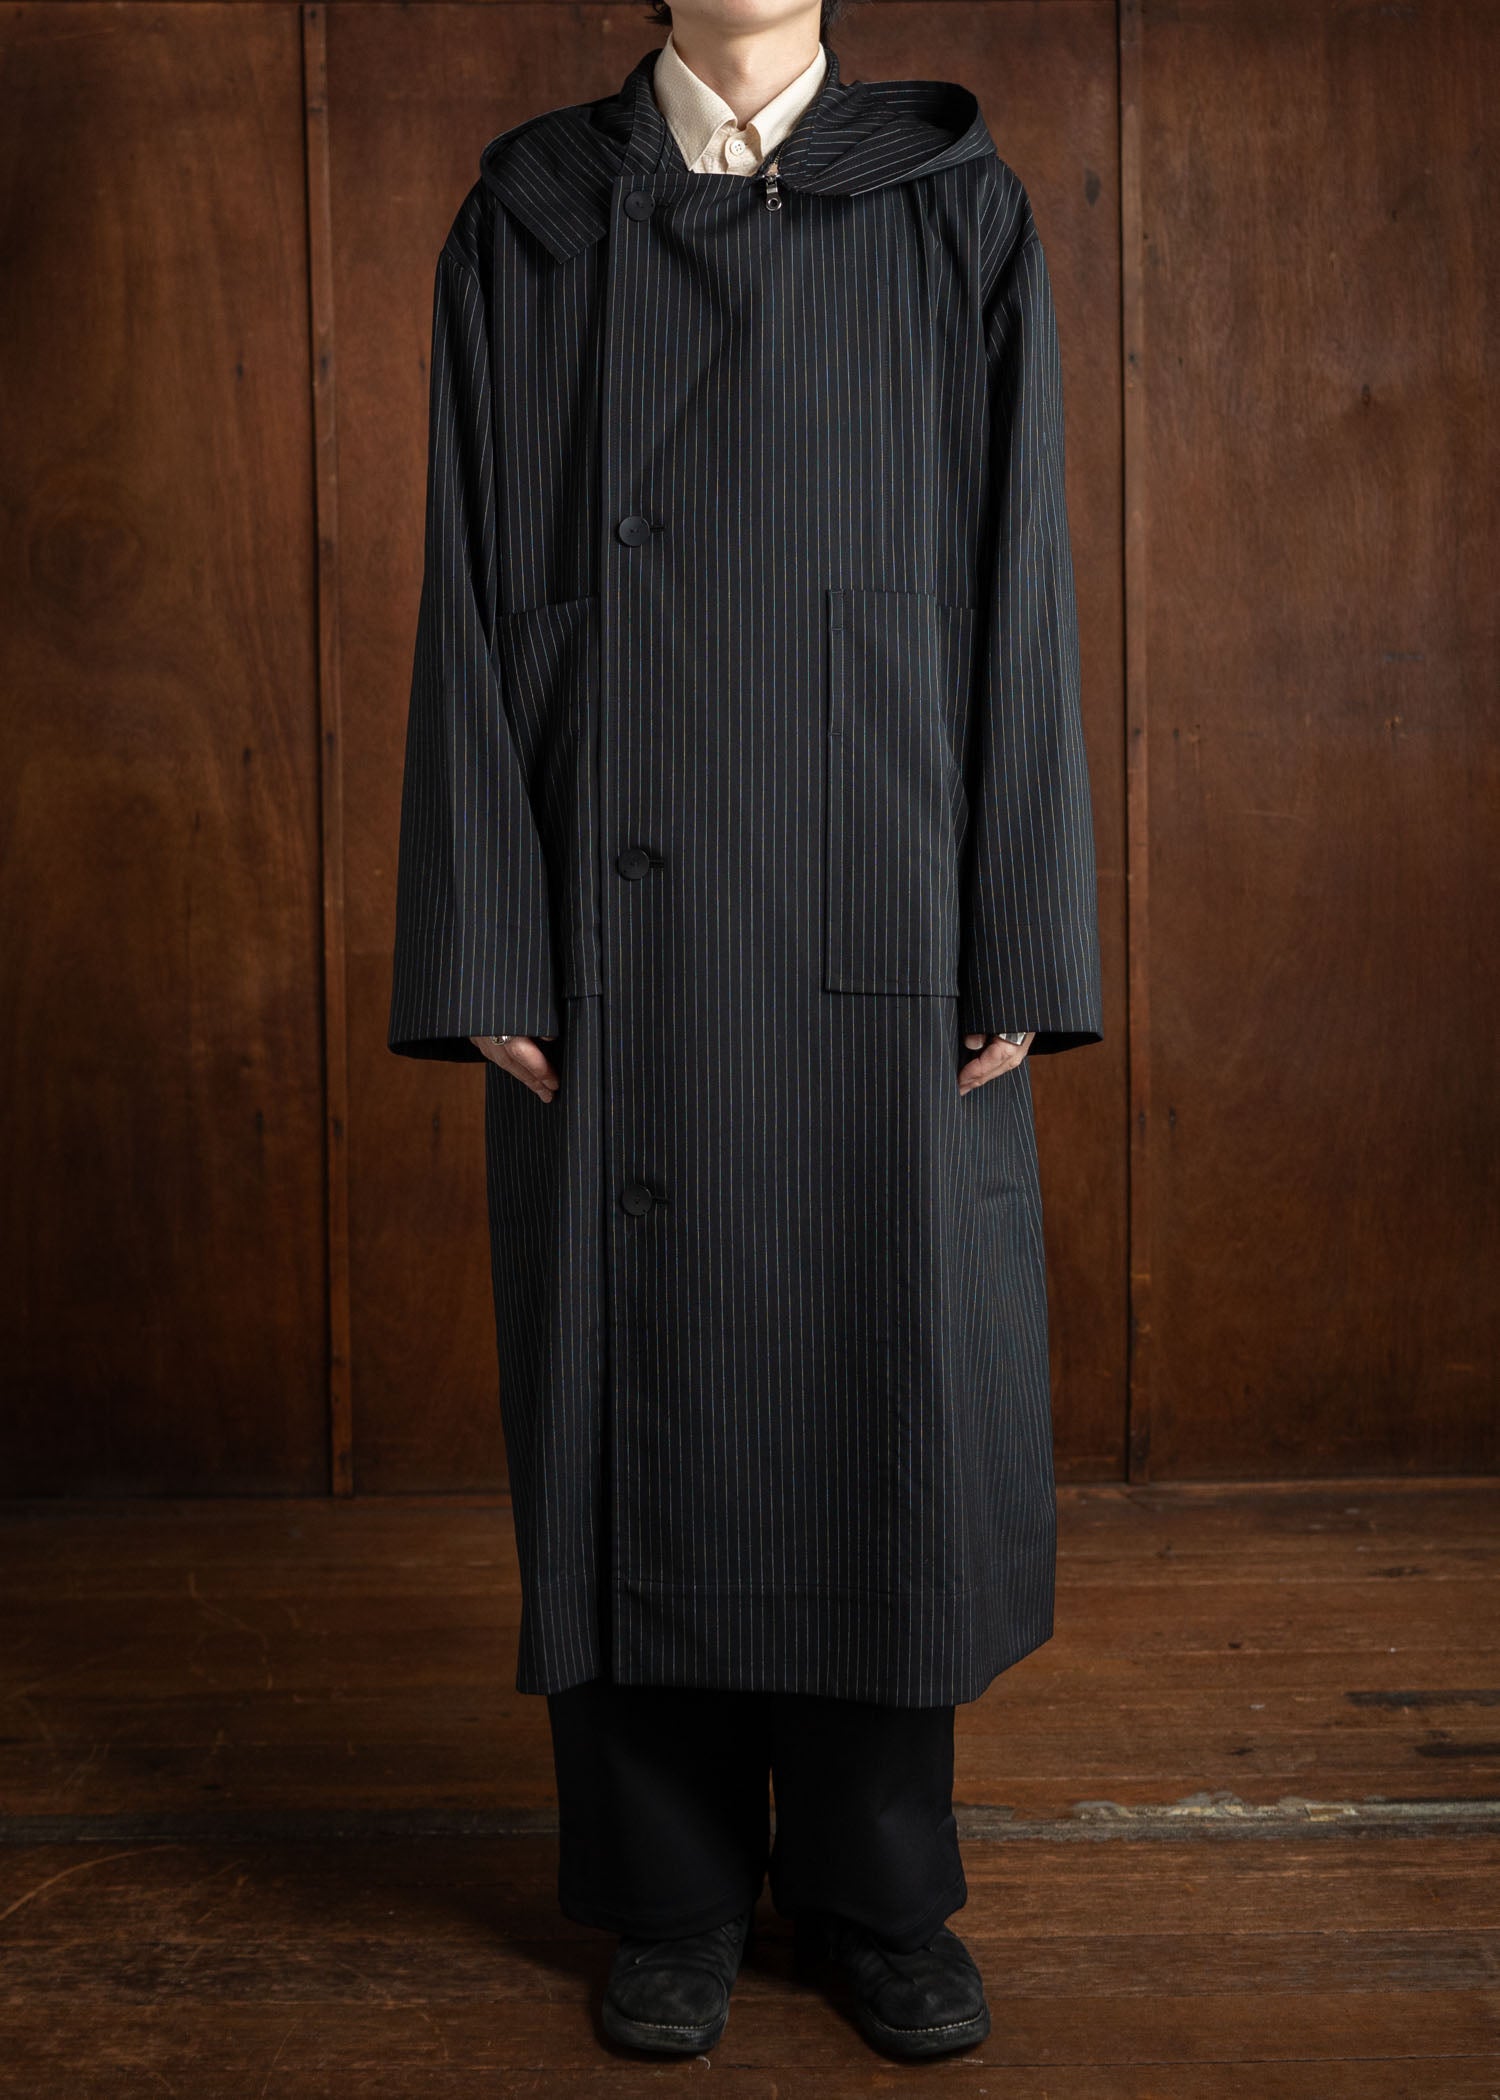 Edwina Horl RE-SET COUTURE Spice coat black stripe